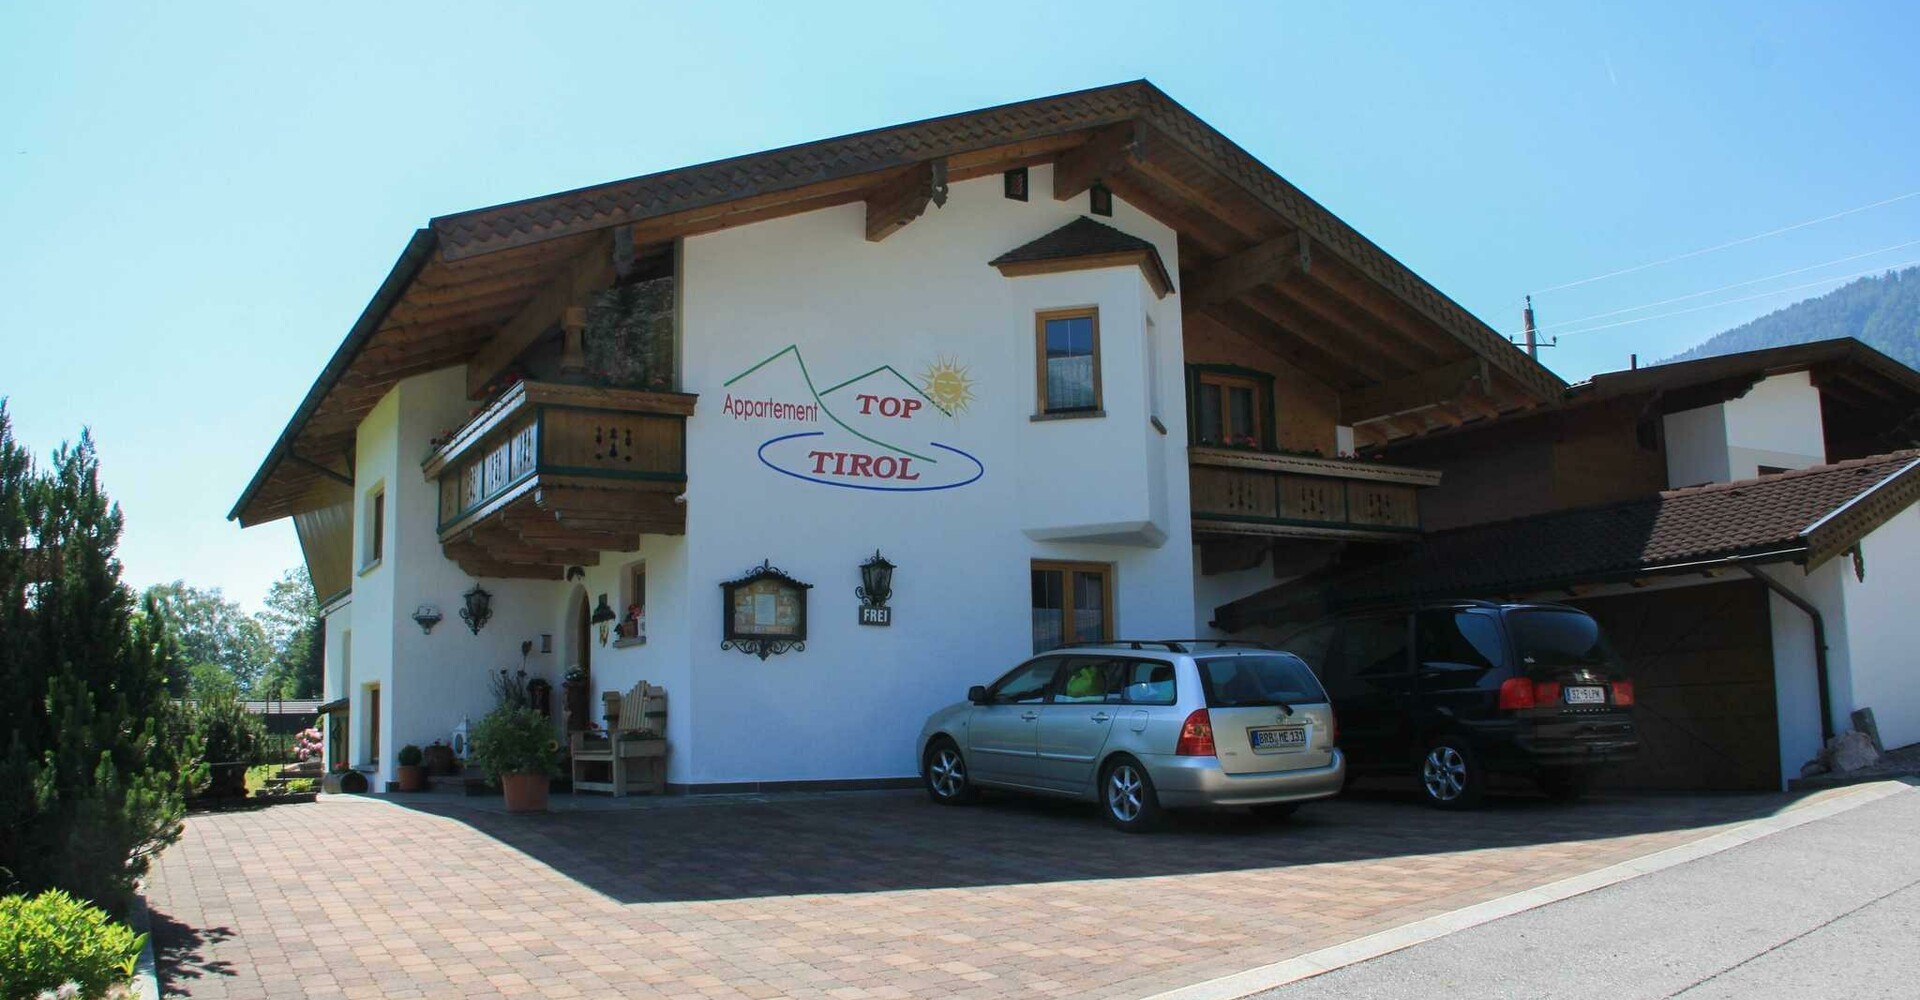 Appartement-Top-Tirol-Sommer.jpg